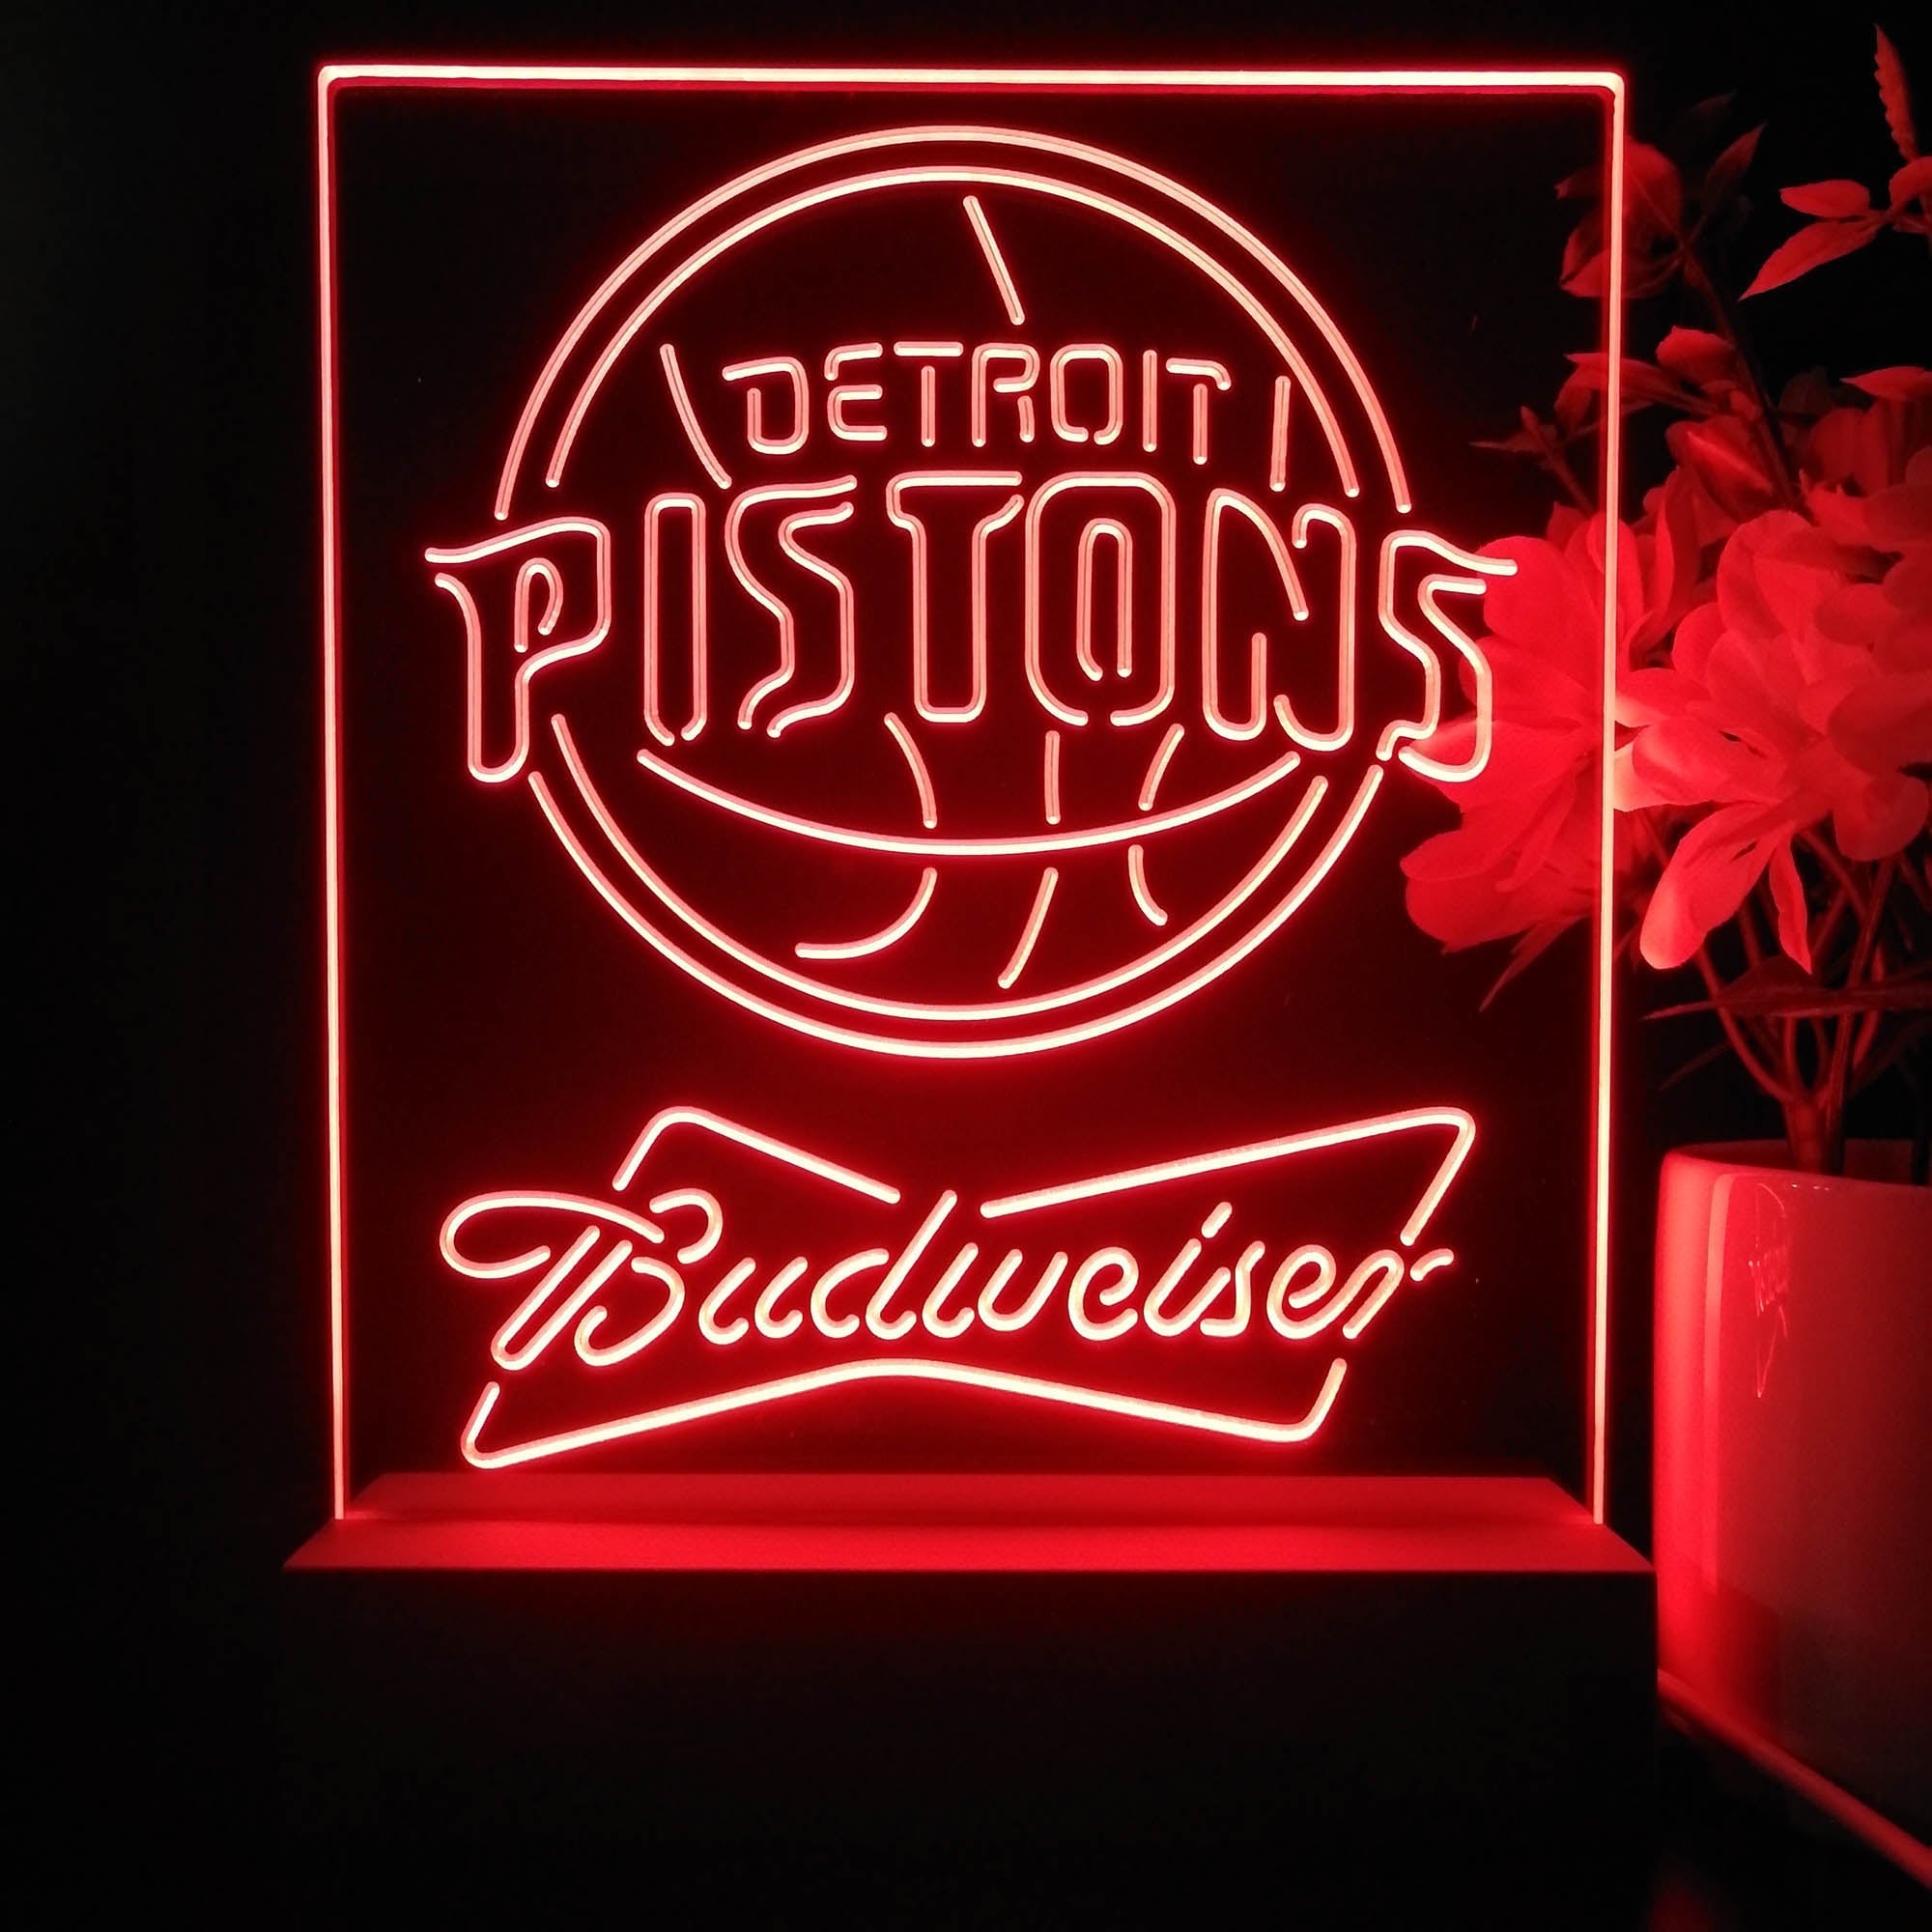 Detroit Pistons Budweiser Neon Sign Pub Bar Lamp